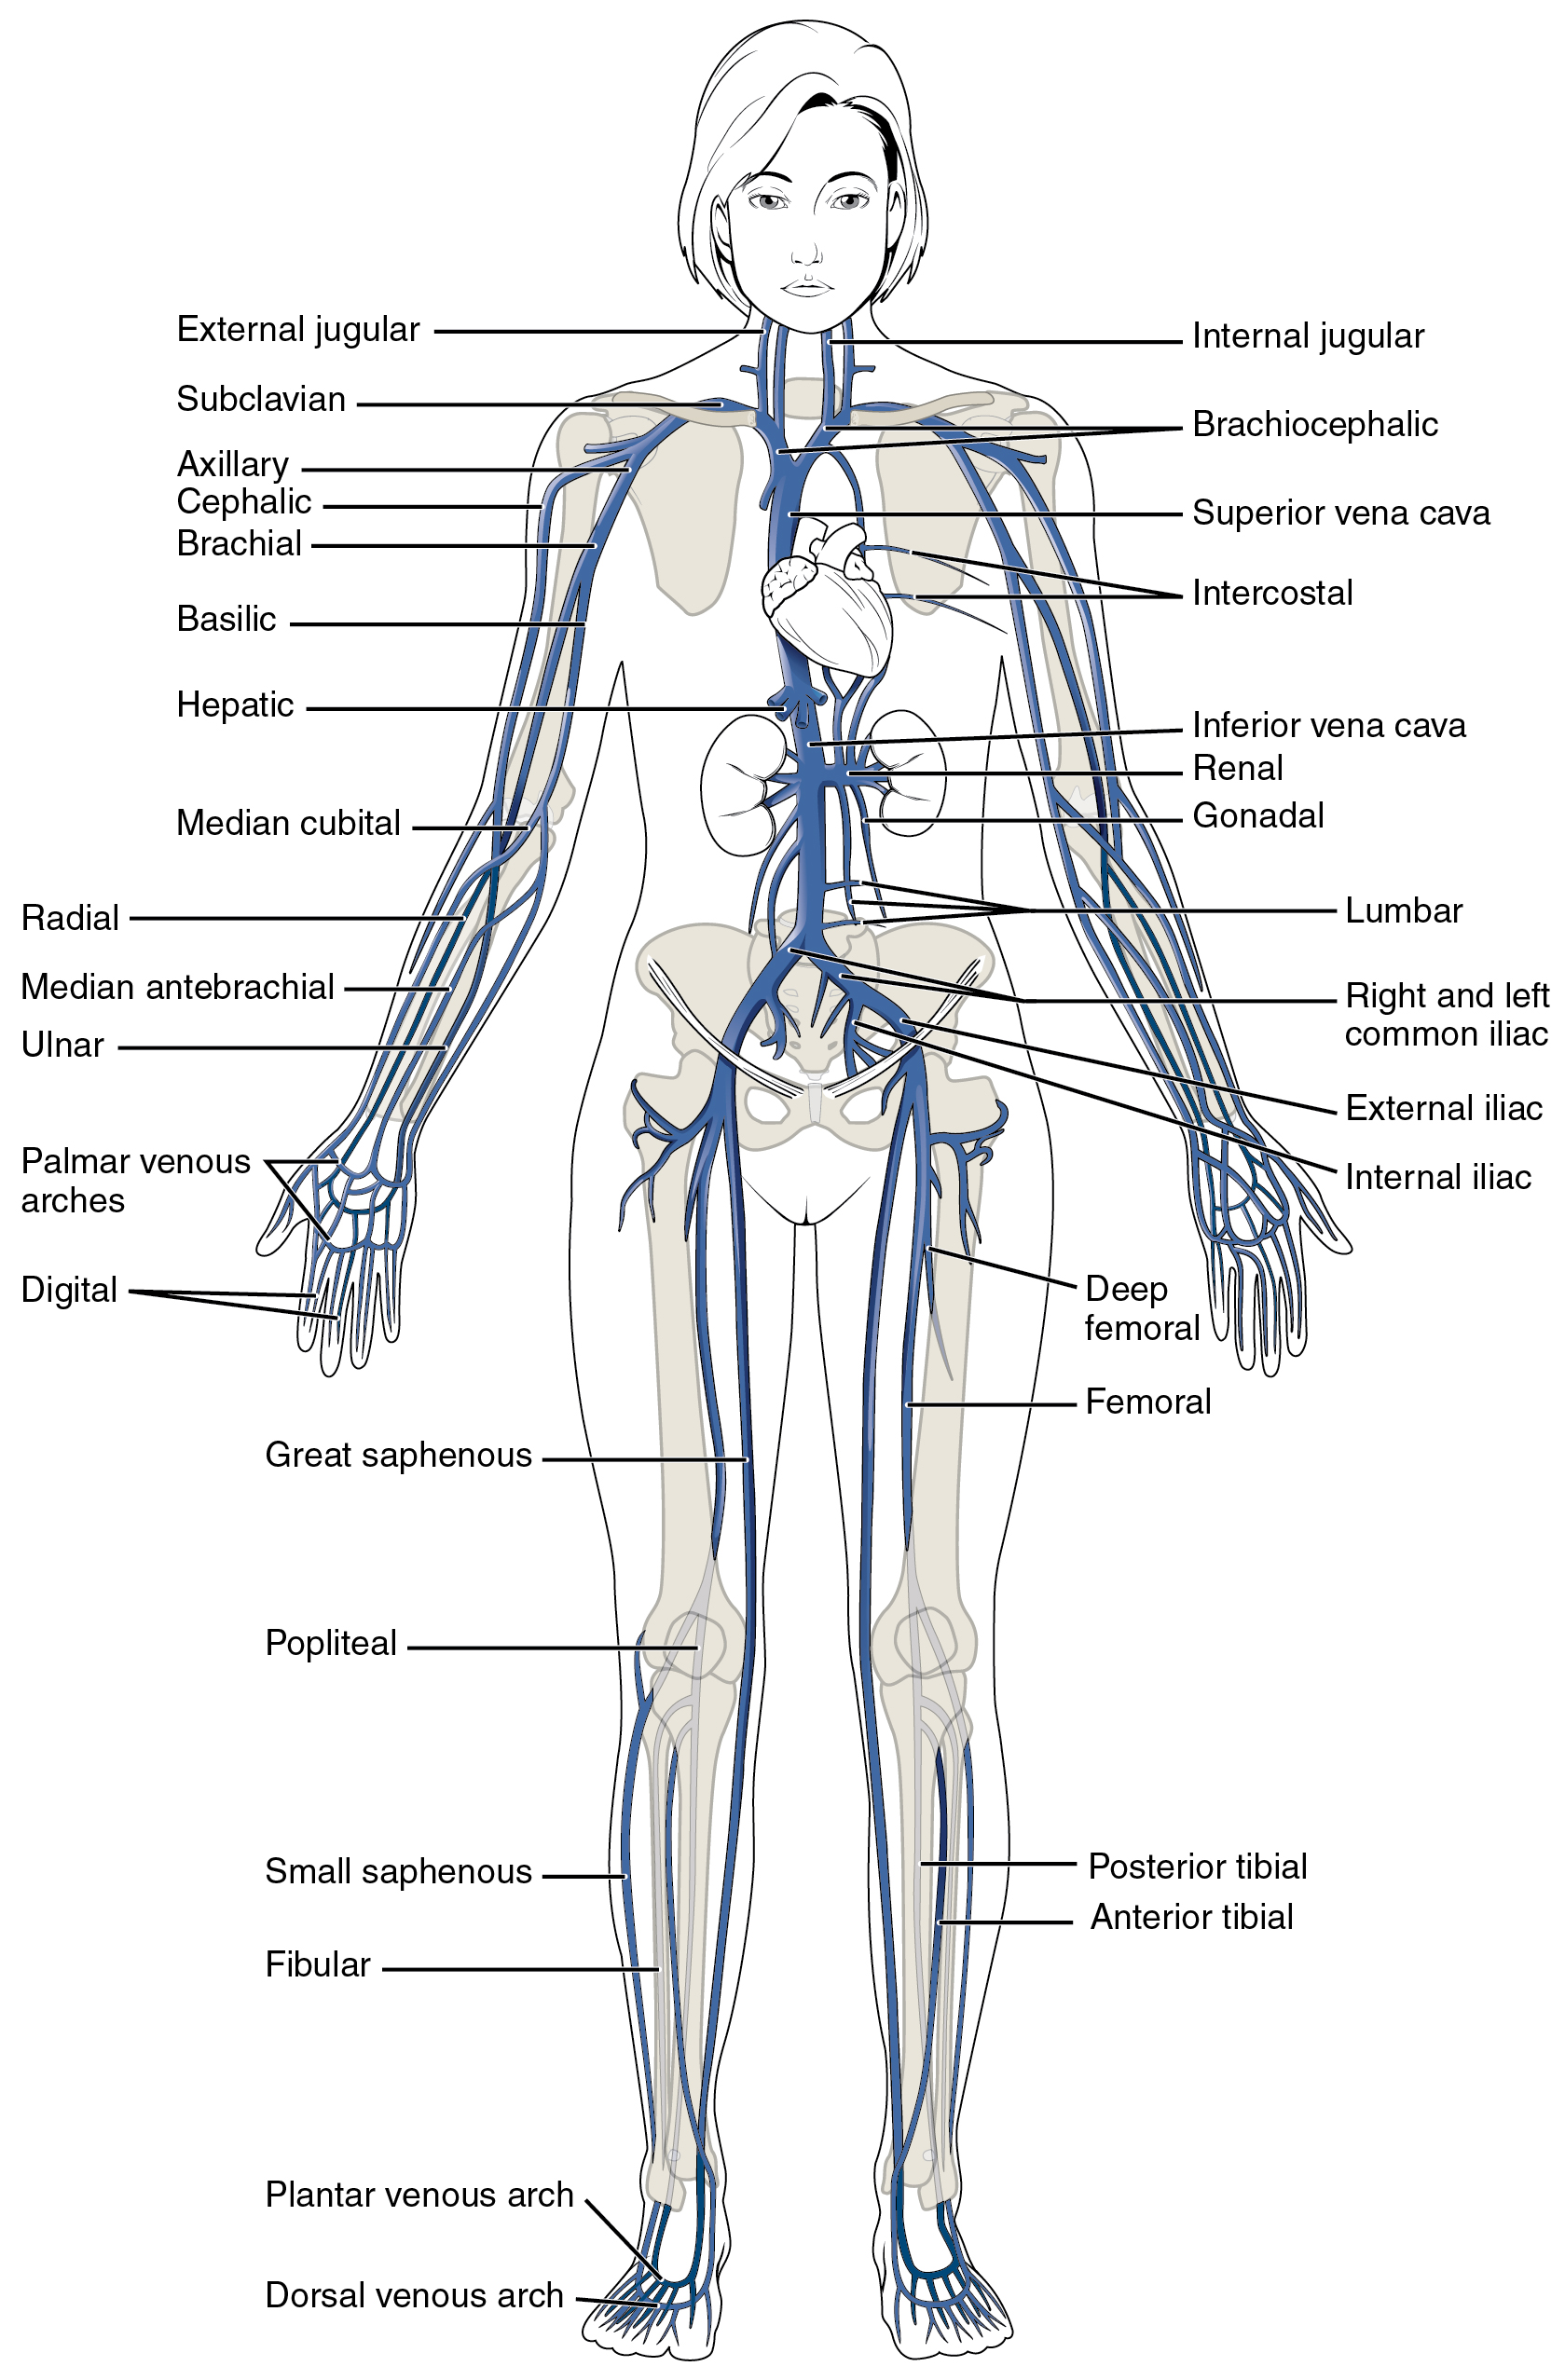 Este diagrama mostra as principais veias do corpo humano.